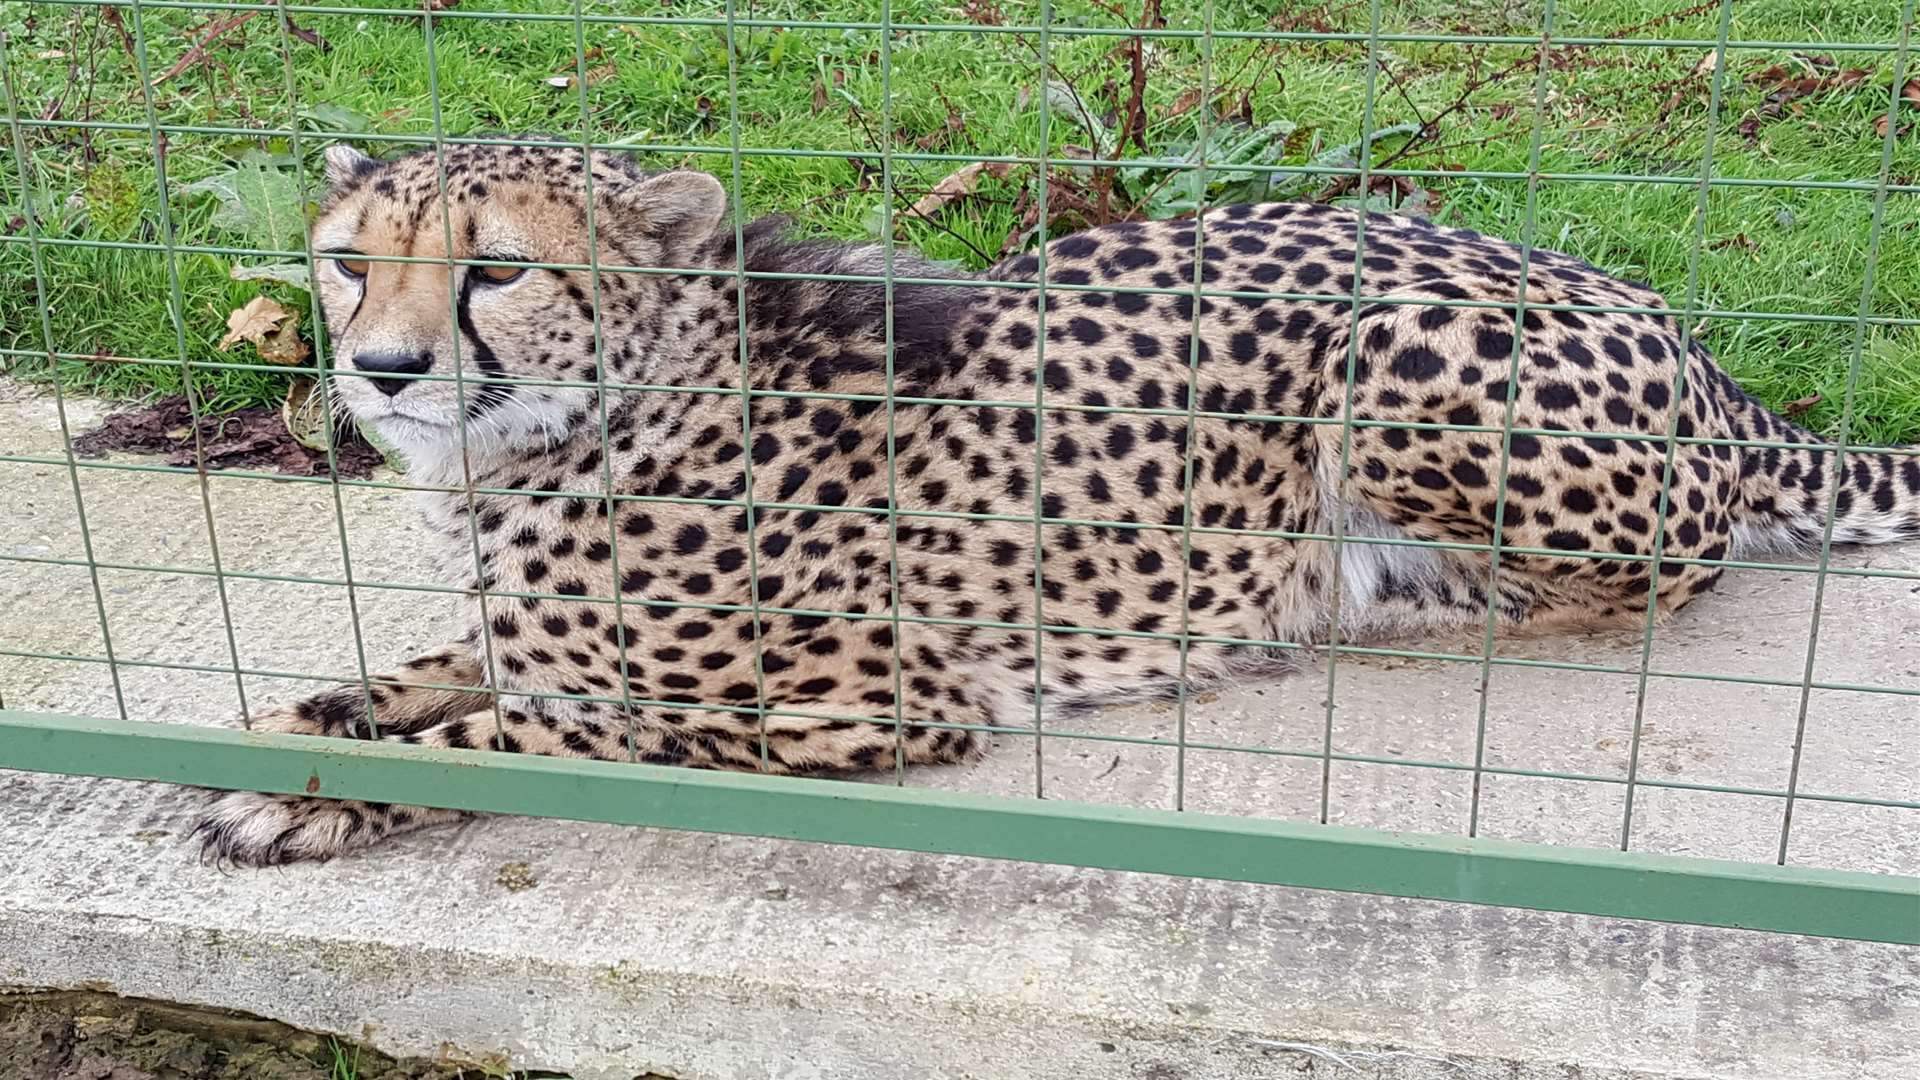 A cheetah escaped from its enclosure at Port Lympne